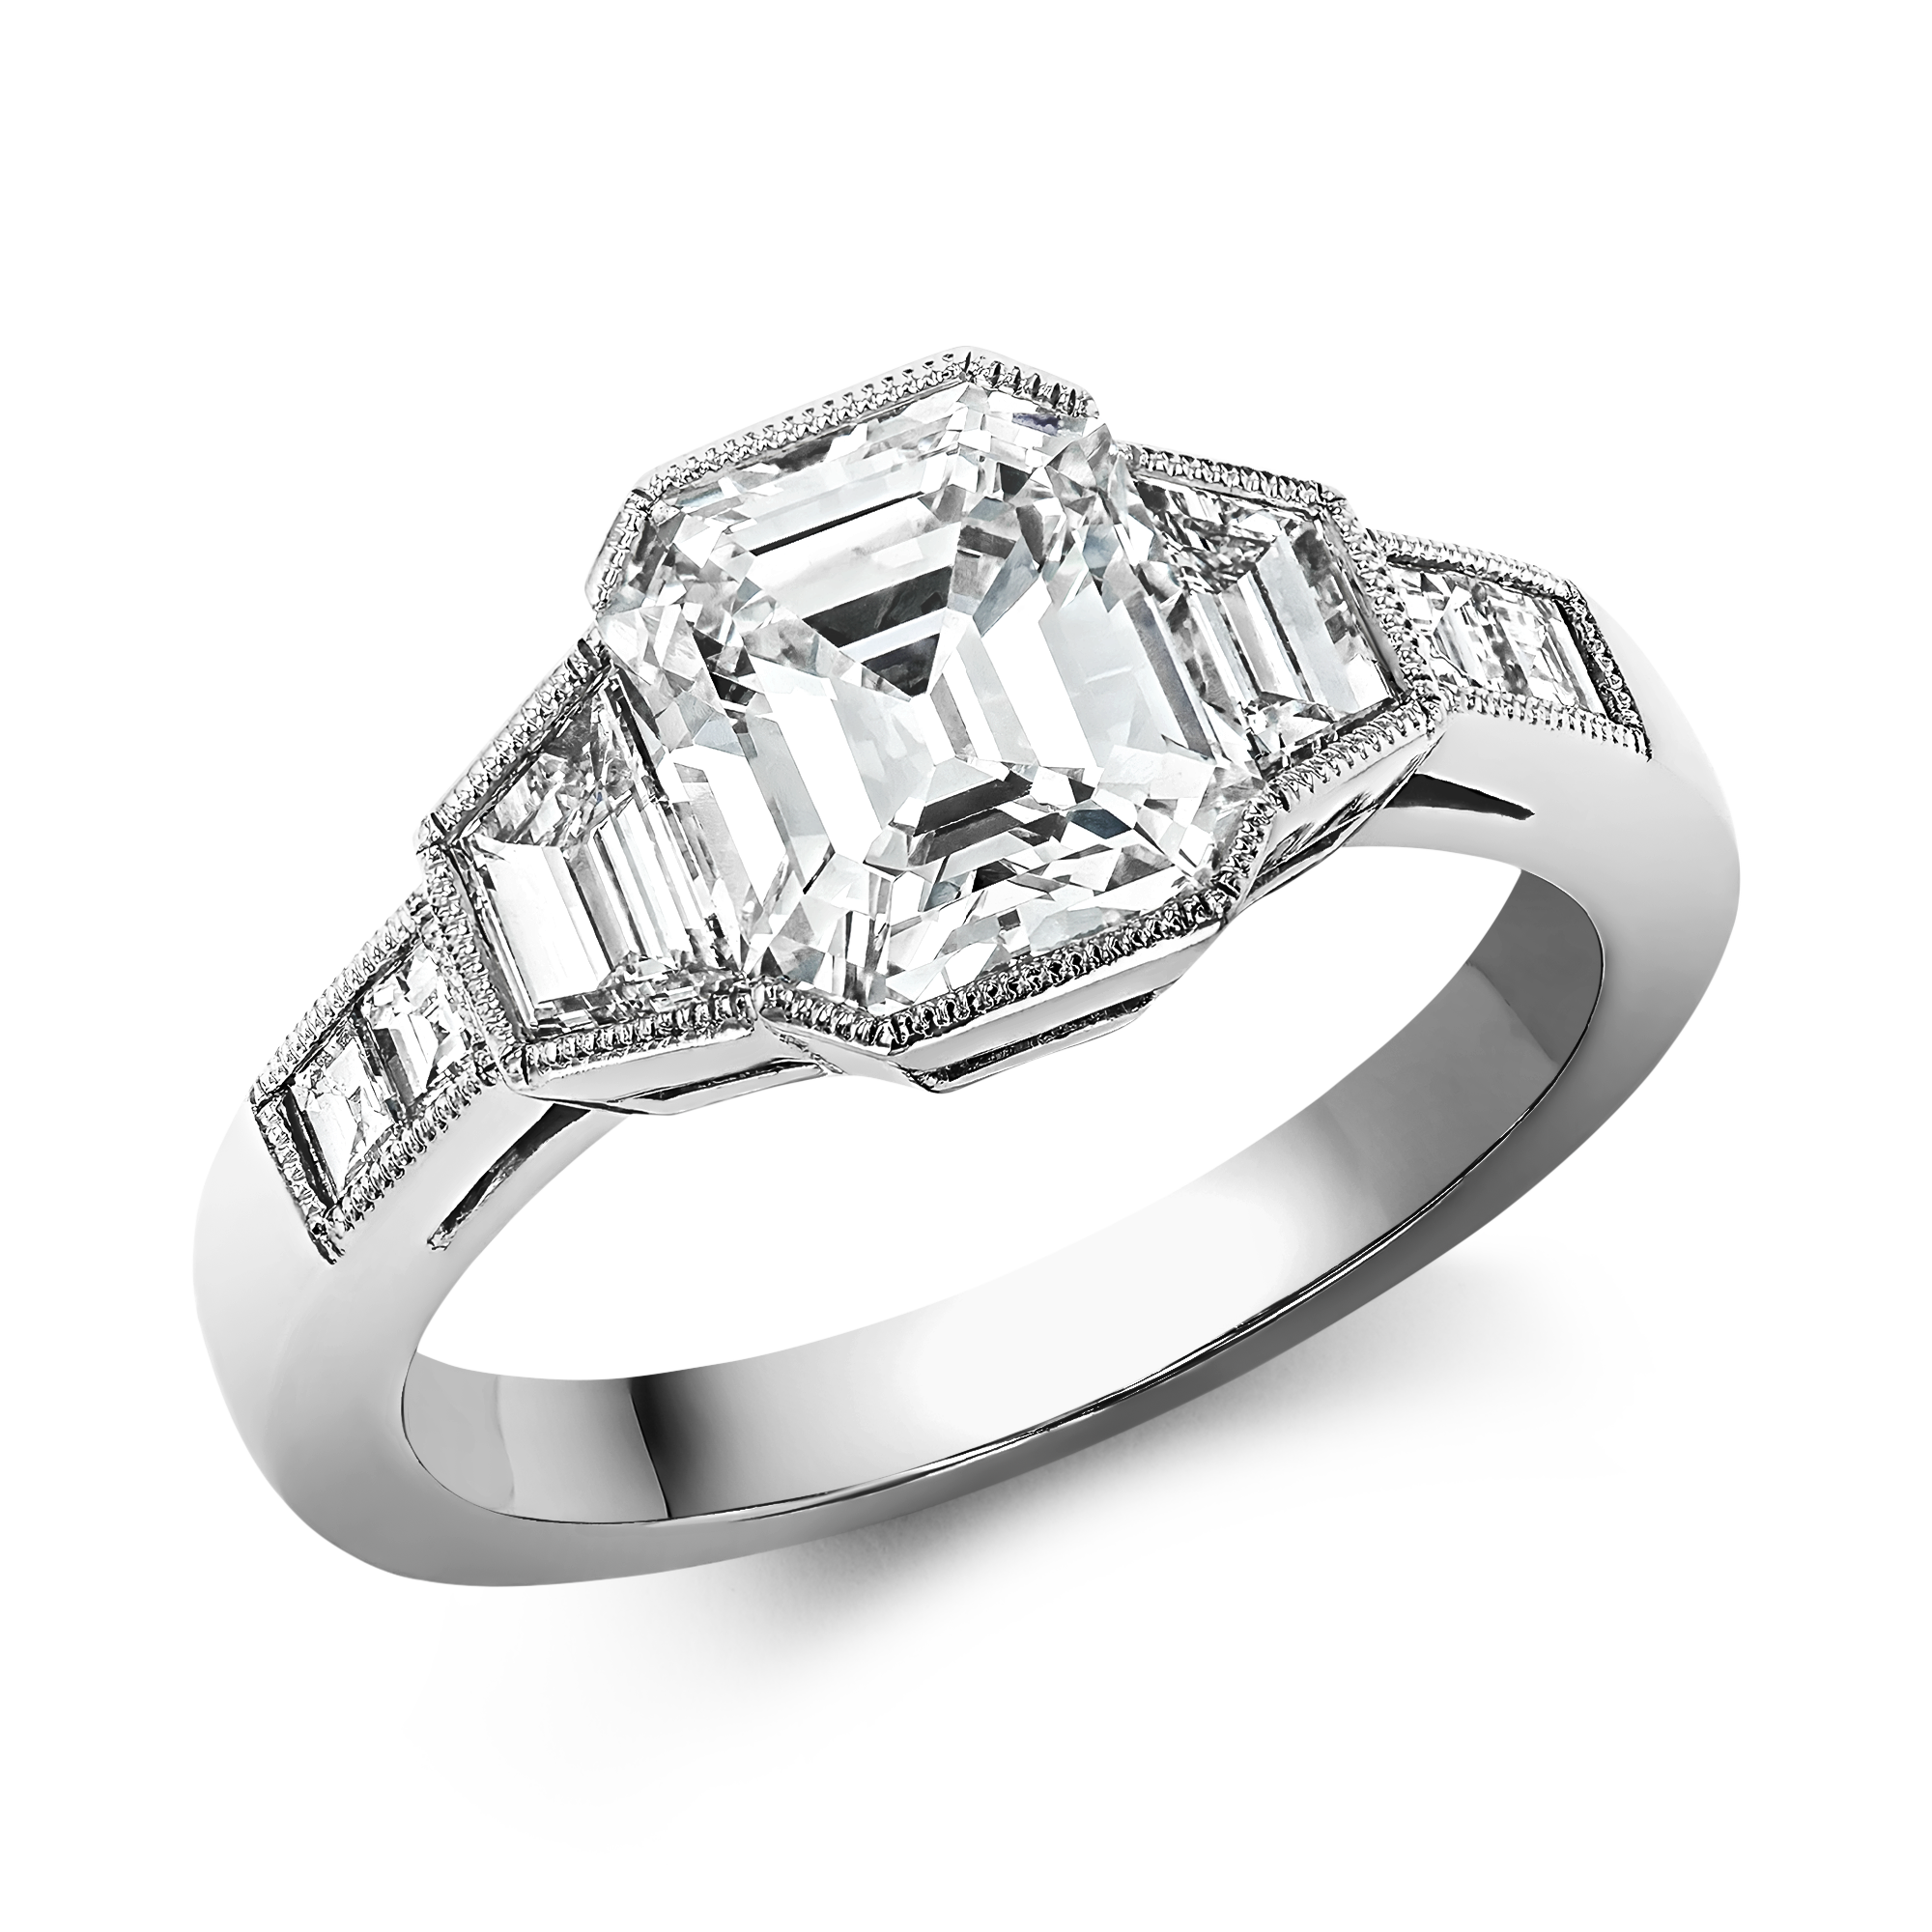 Art Deco Inspired 2.02ct Diamond Solitaire Ring Emerald Cut, Milegrain Set_1